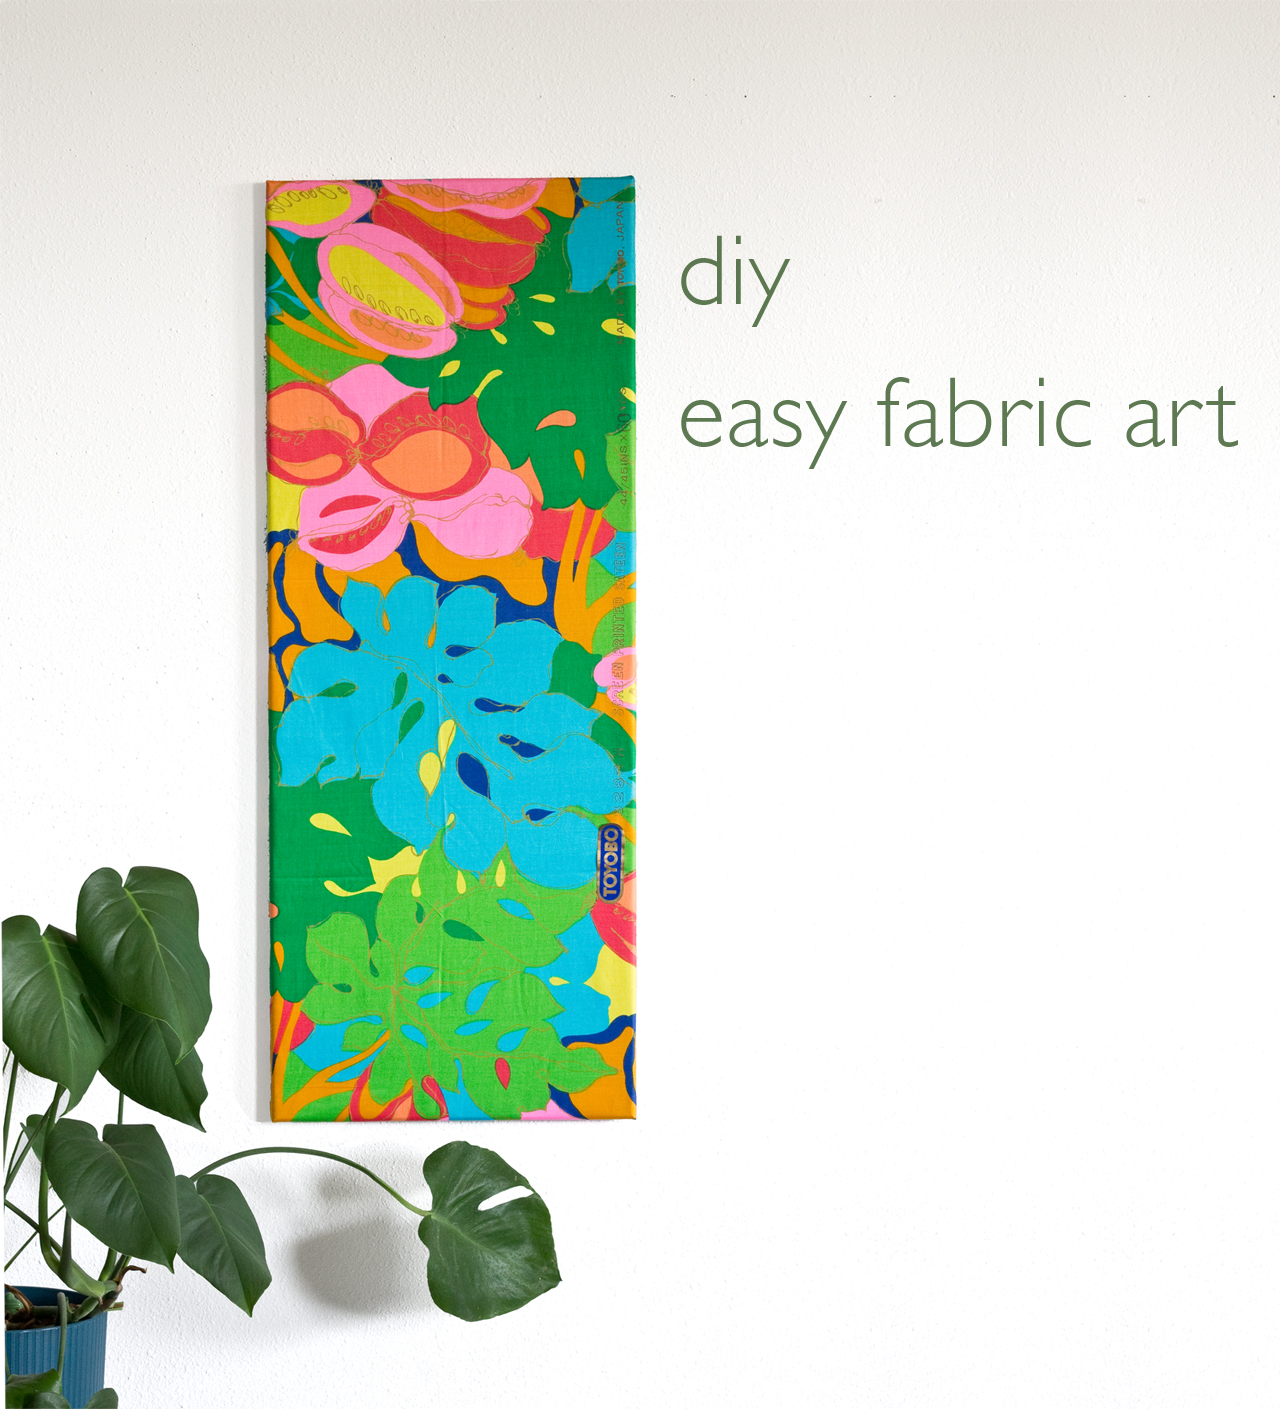 DIY Easy Fabric Art by Vitamini Handmade